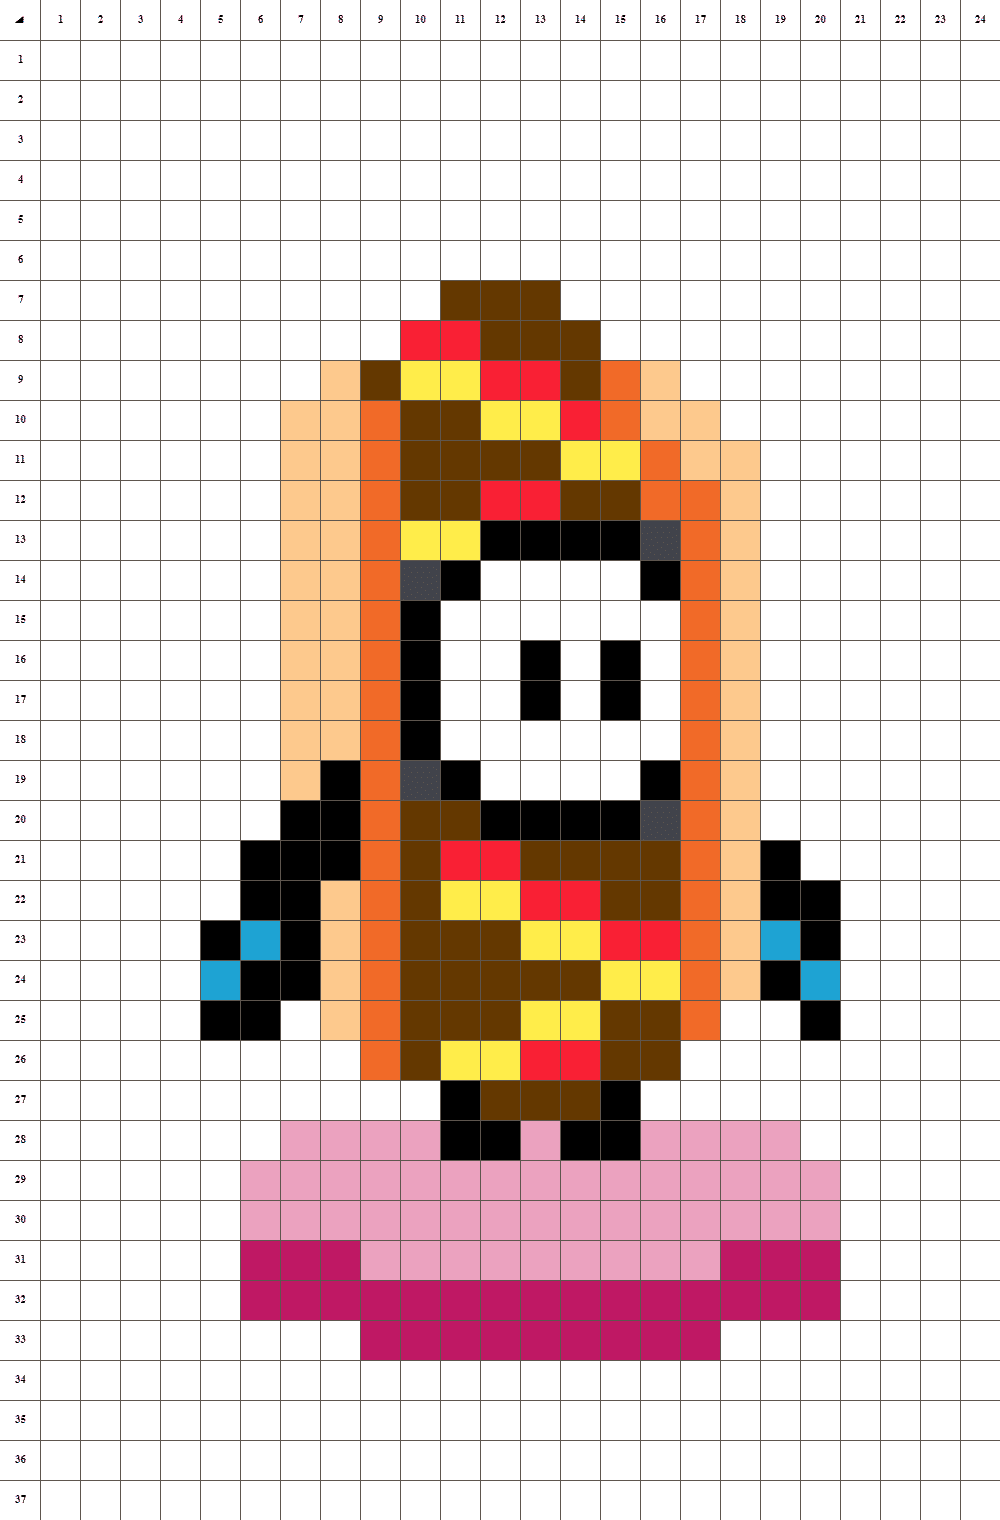 Fall Guys Hot Dog pixel art